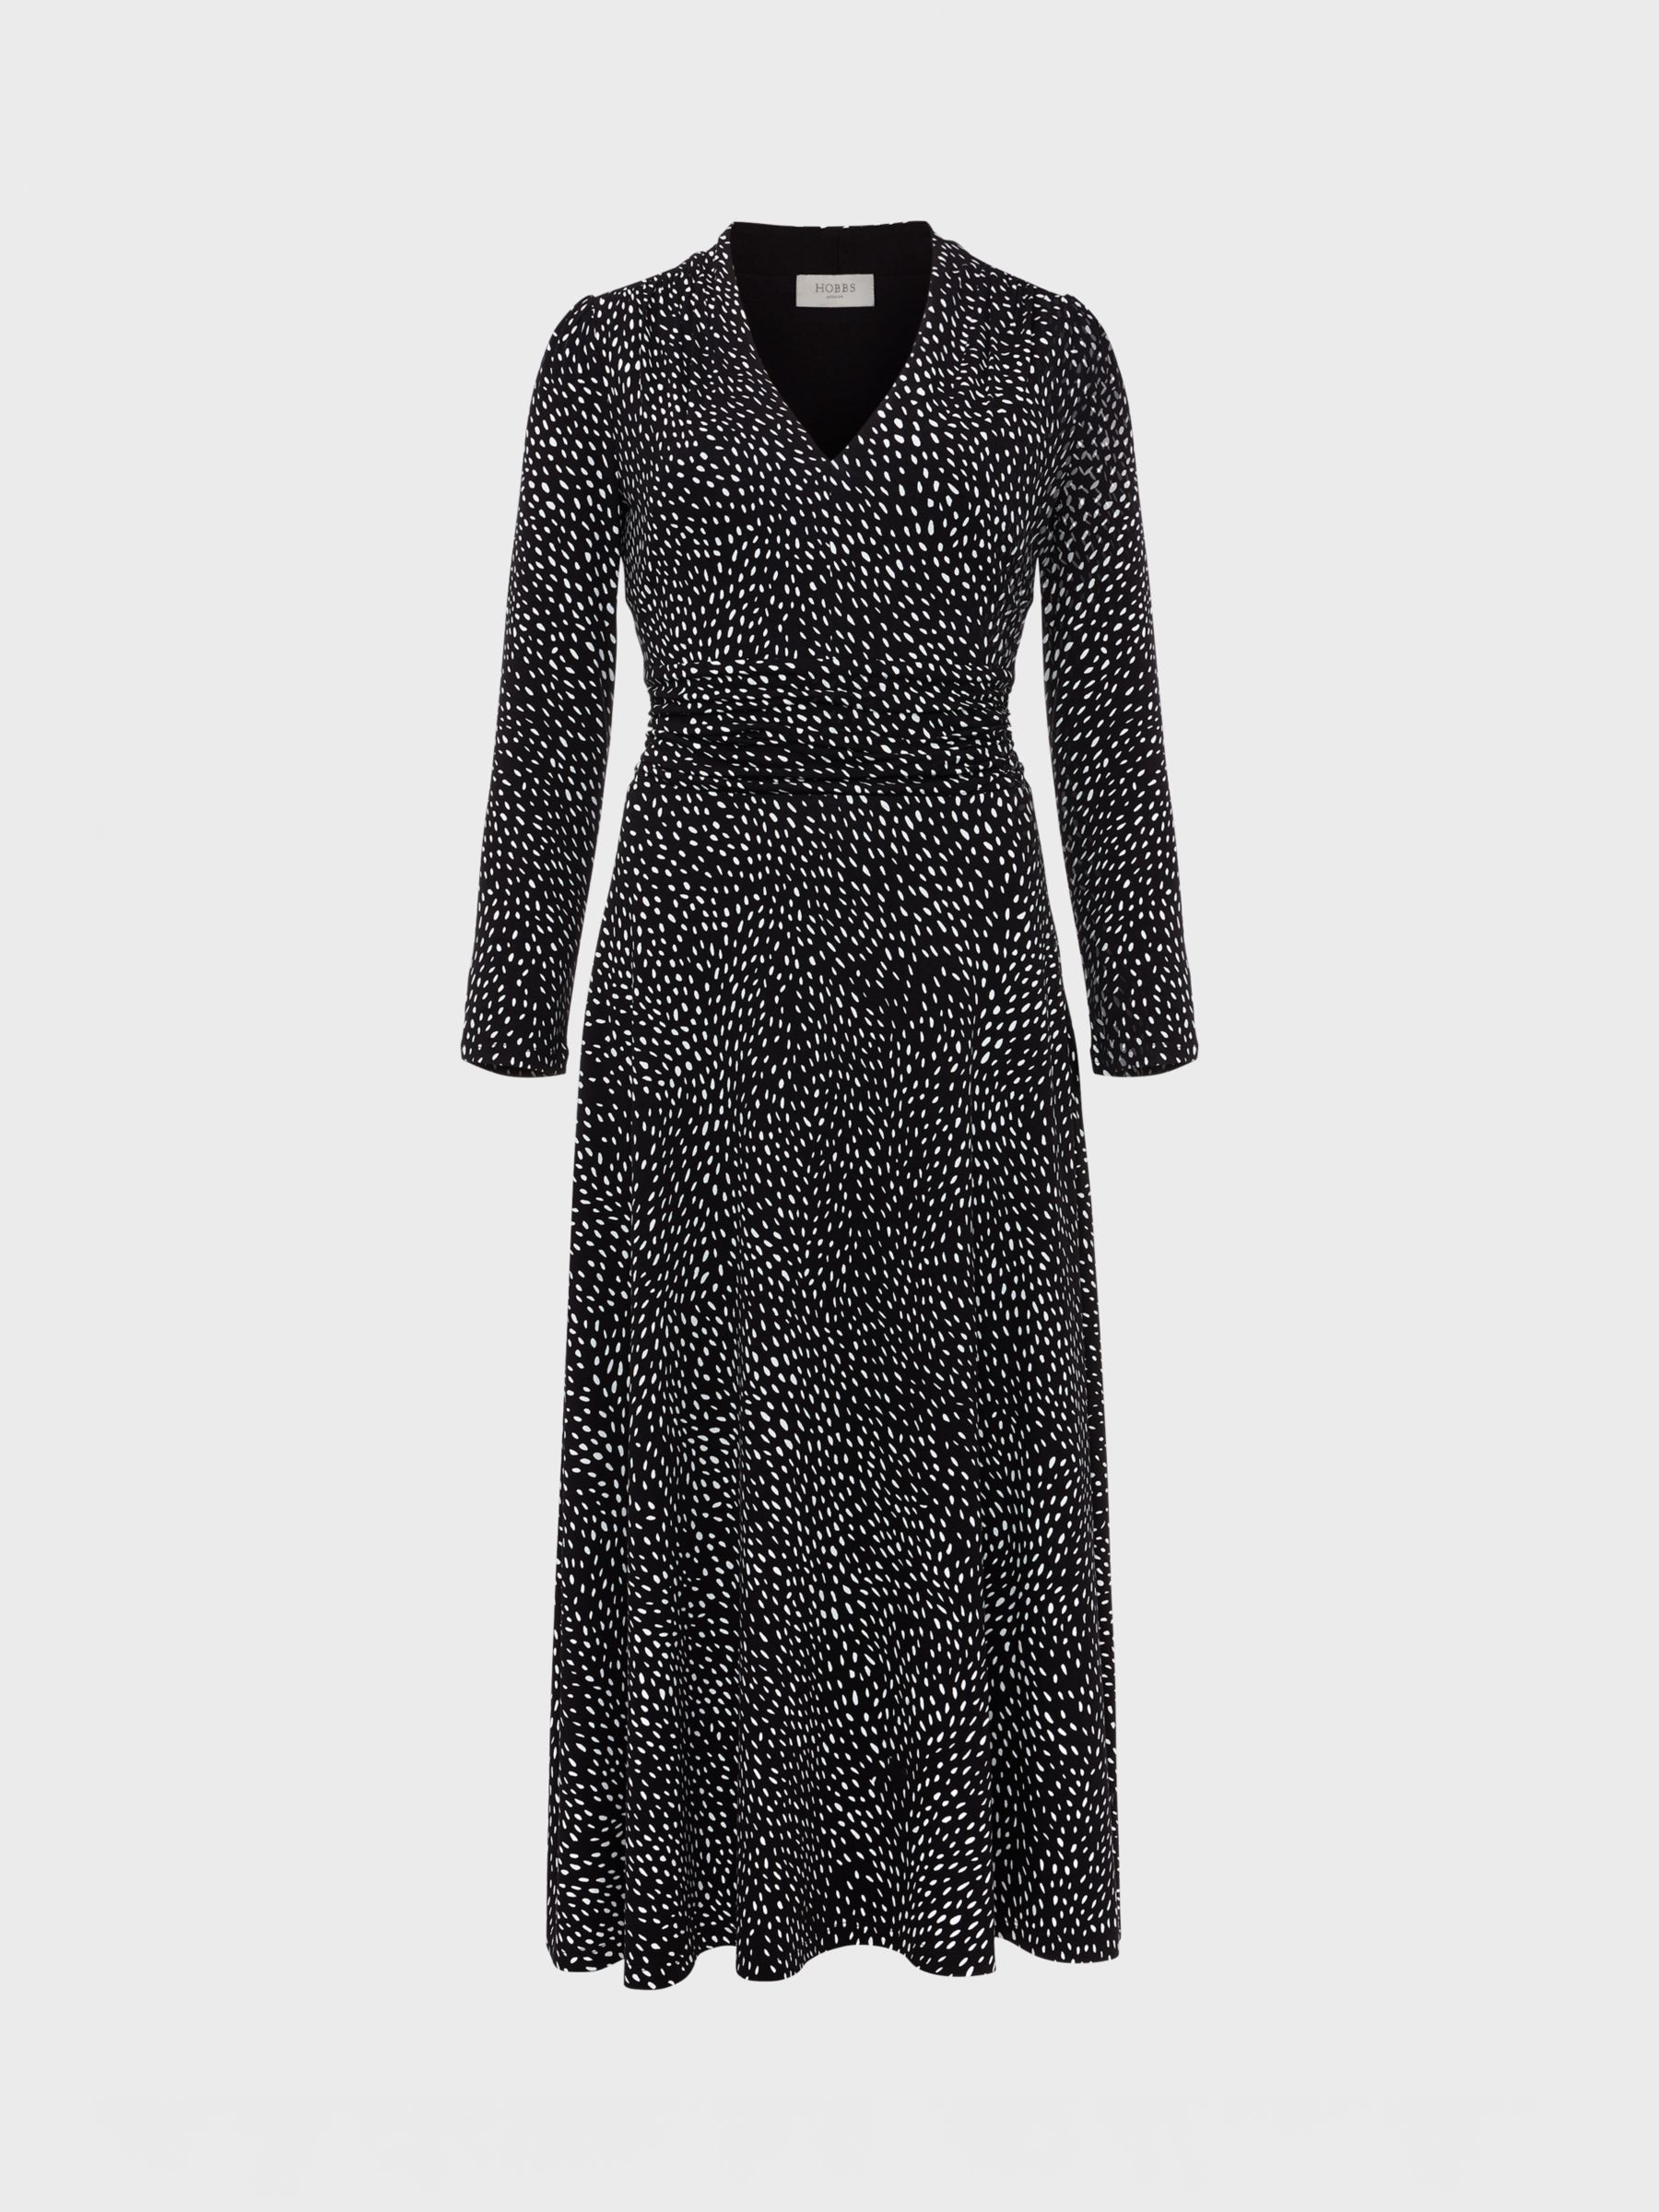 Hobbs Drew Ecovero Print Jersey Dress, Black/Ivory, 10